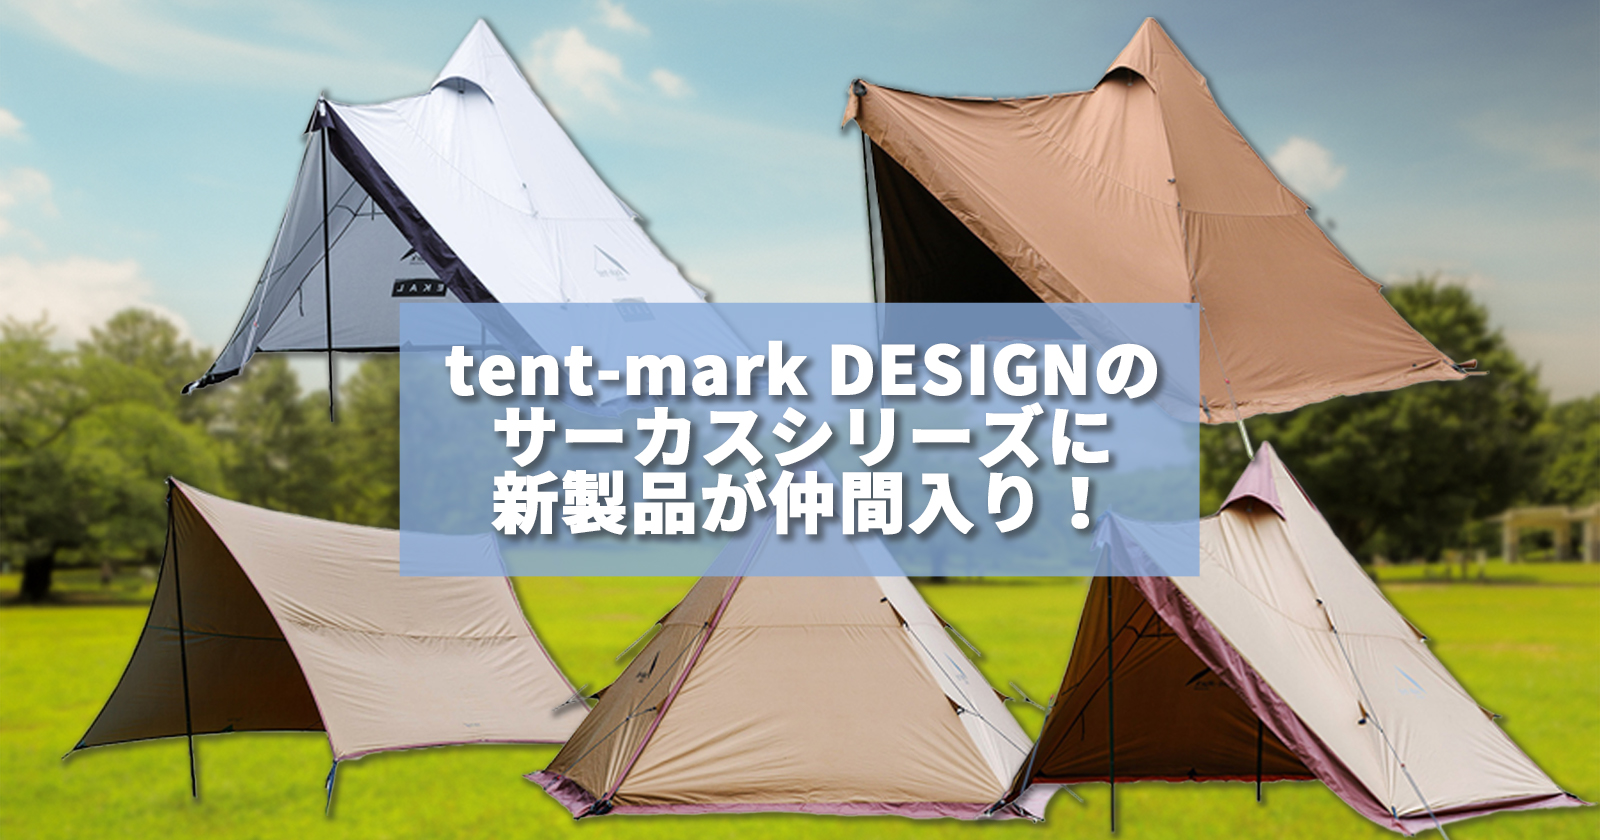 tent-mark DESIGNのサーカスシリーズに新製品が仲間入り！初心者に 